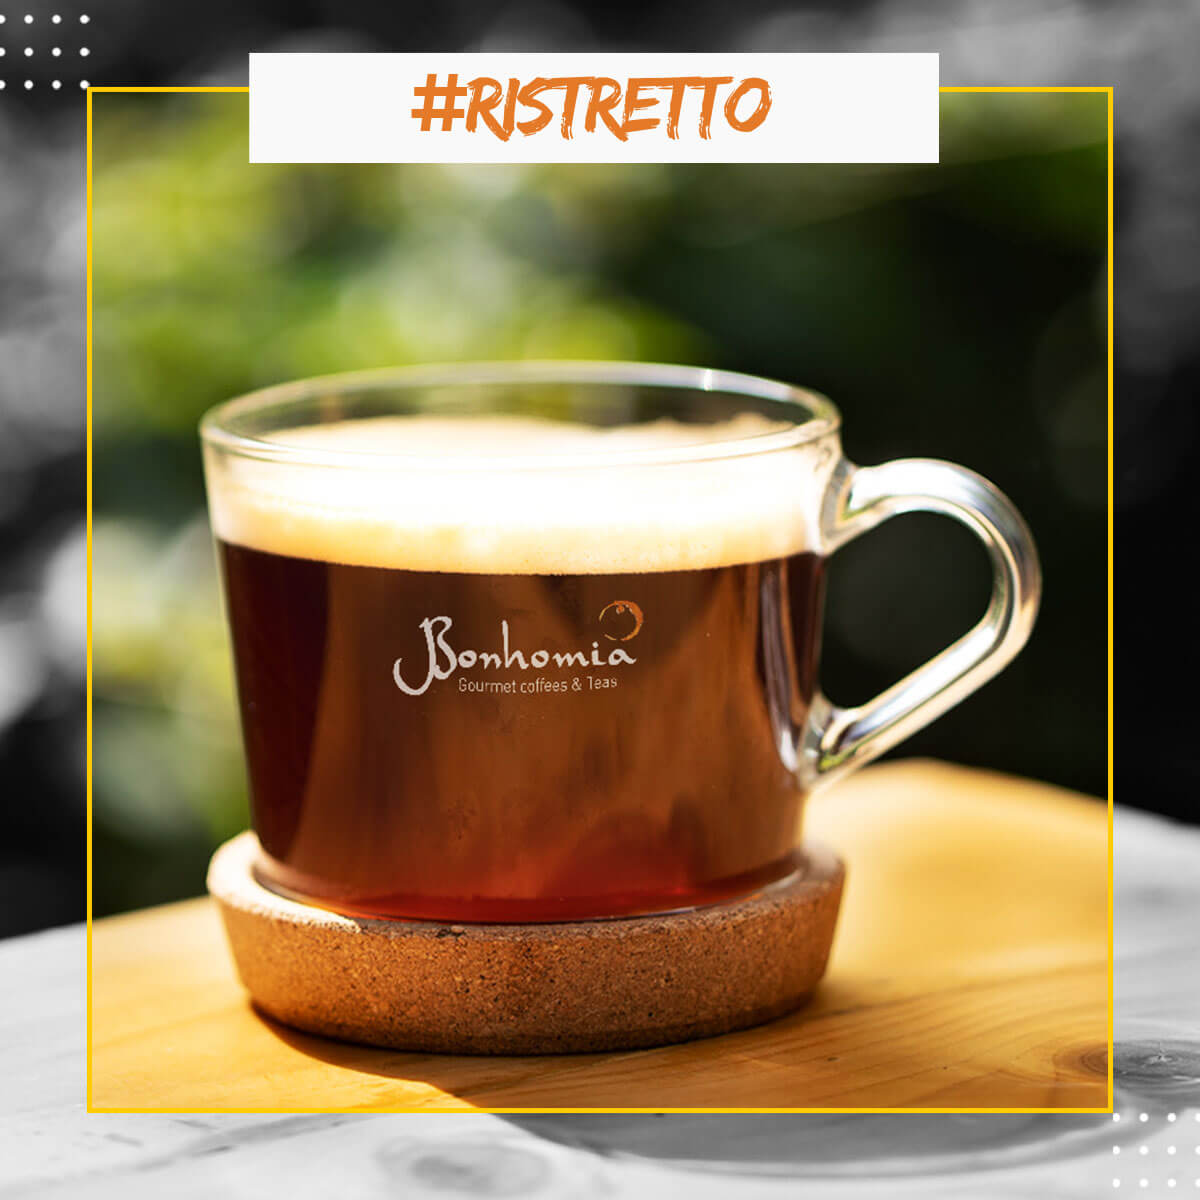 Ristretto Espresso Pods - Intensity 10/10 | Dark Roast | Nespresso Compatible | AA+ Grade Beans | Aluminum Capsules